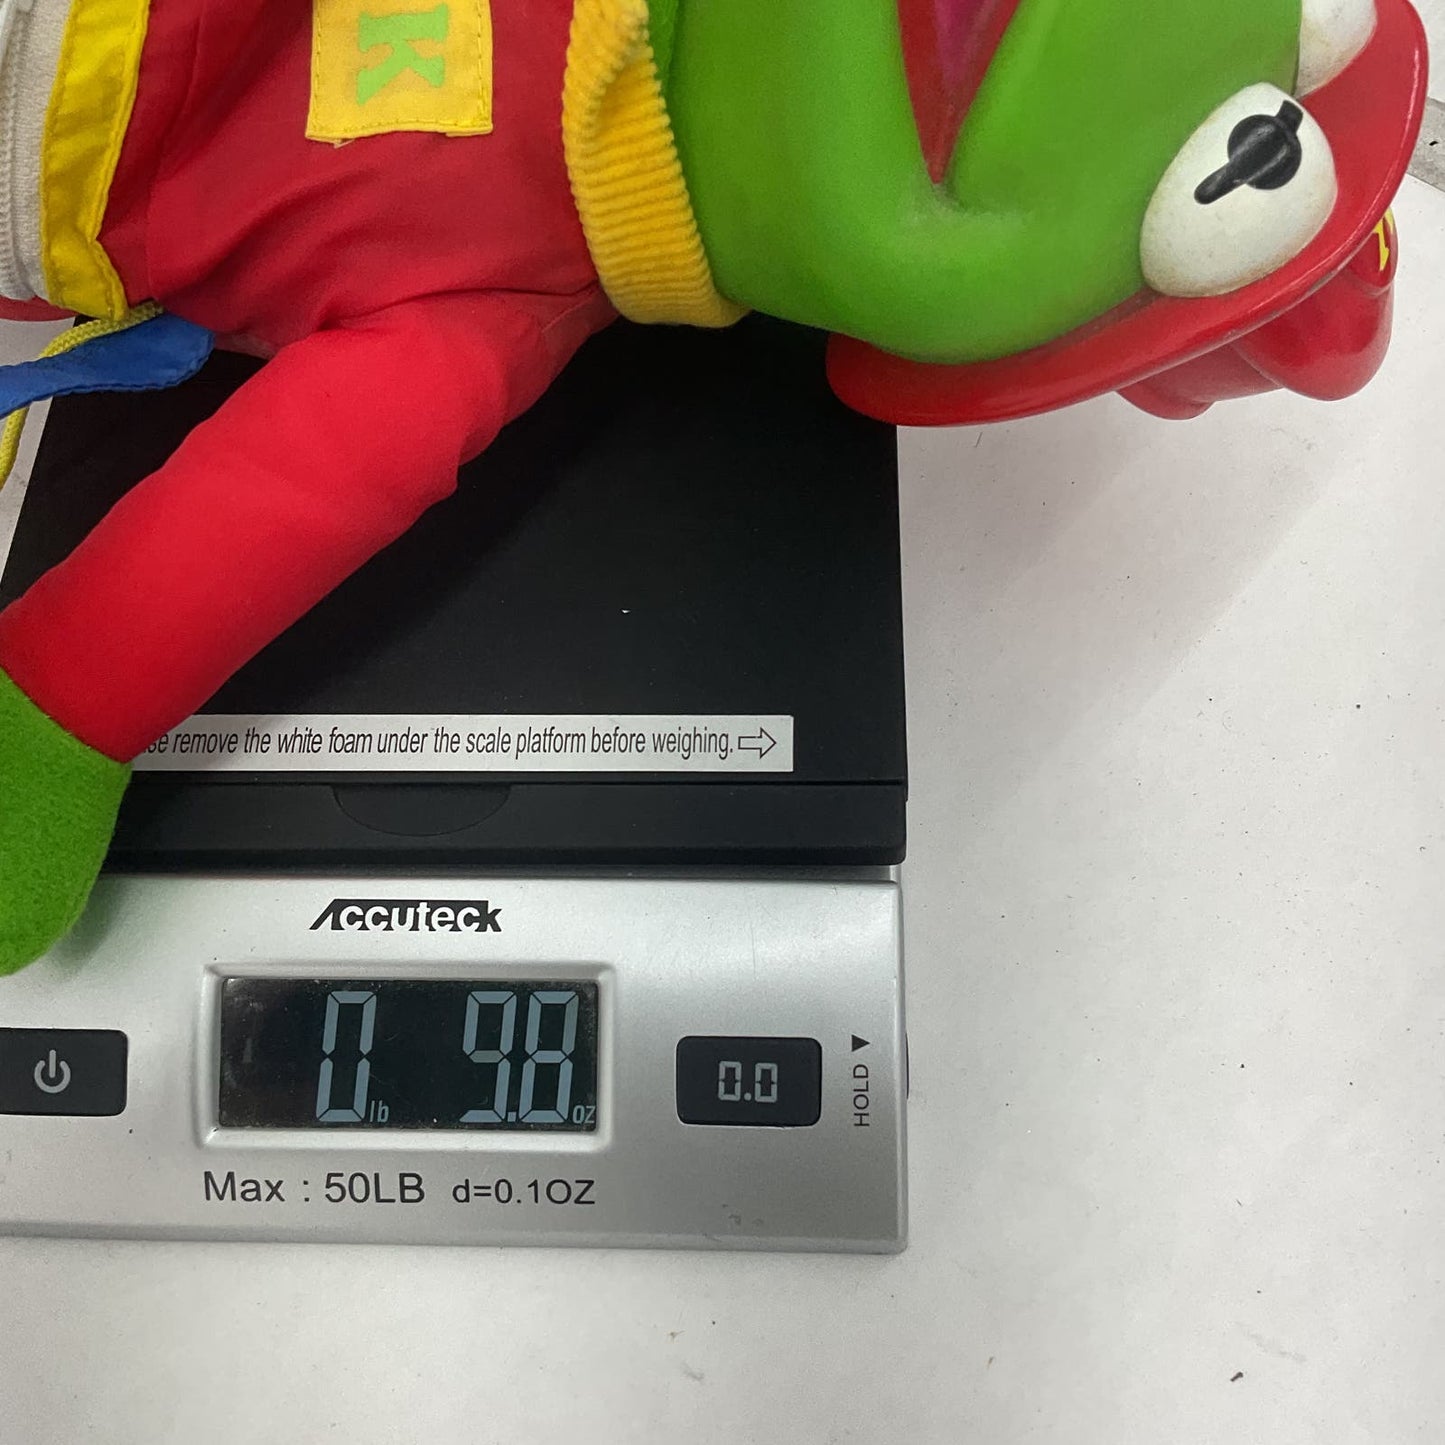 Mattel Kermit the Frog Muppets Firefighter Stuffed Animal Plush Doll Toy 1990 - Warehouse Toys